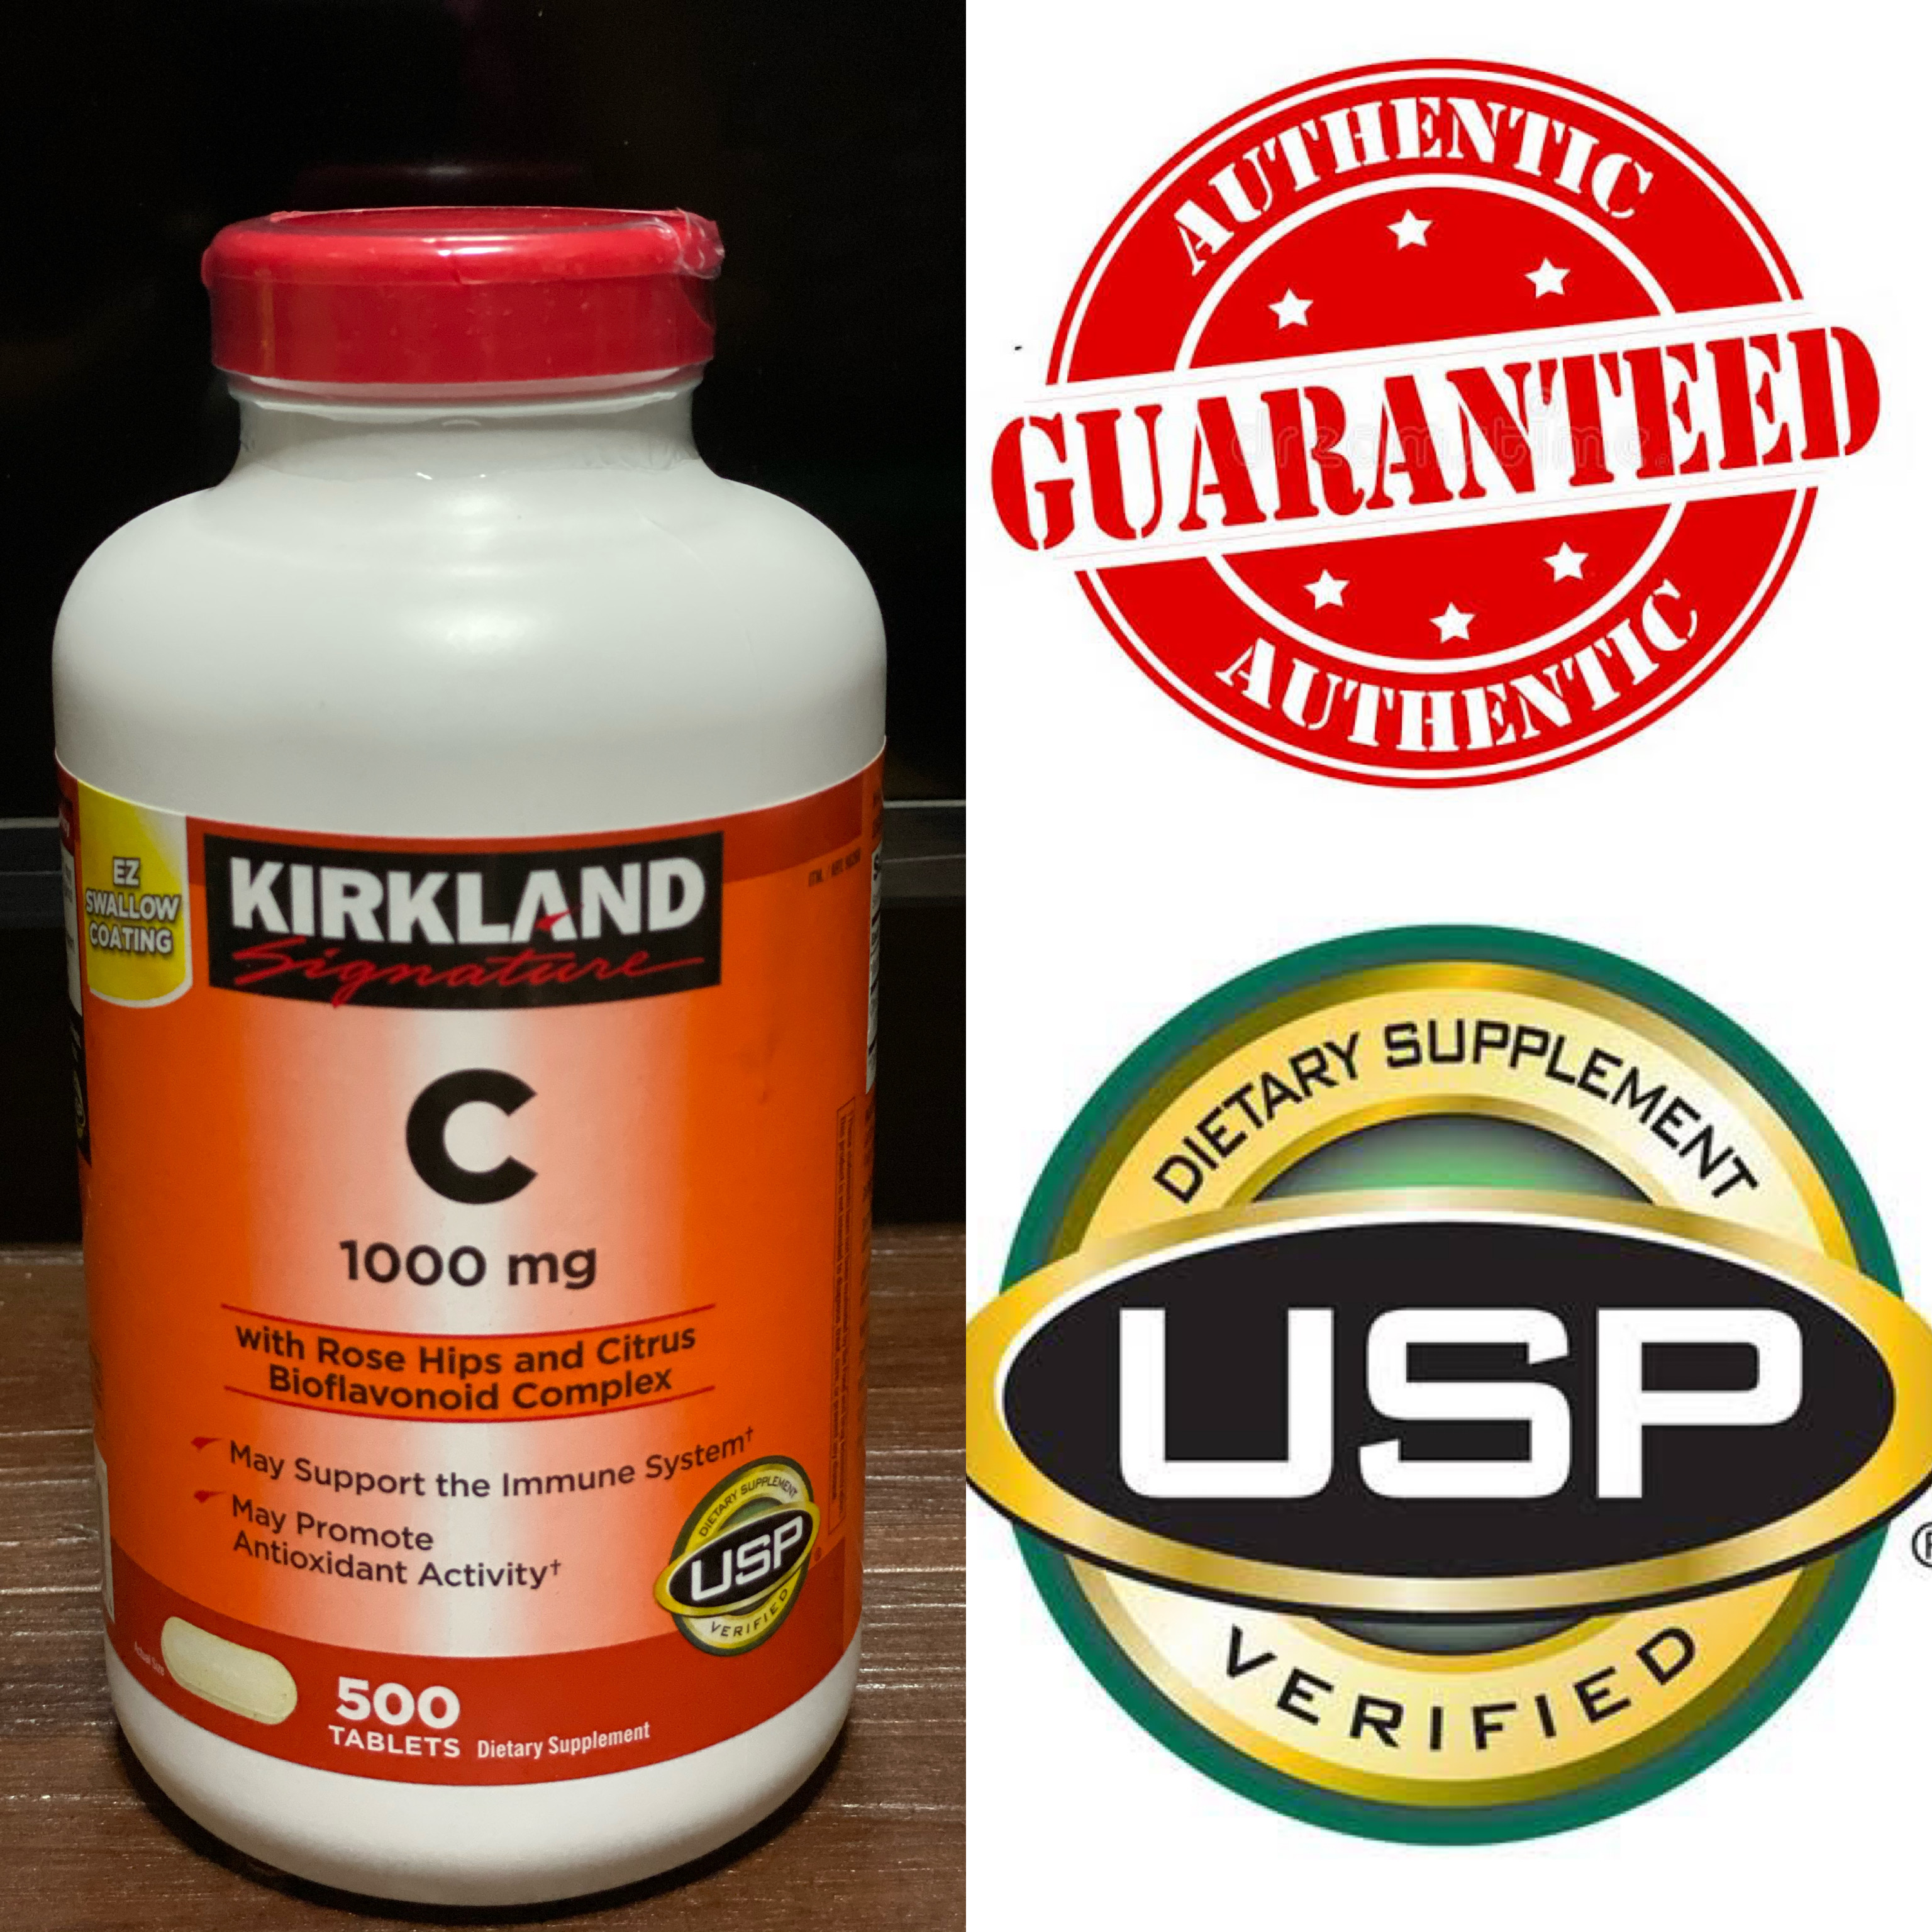 Kirkland Signature Vitamin C 1000mg 500 Tabs From Costco Usa Expiration Date August 24 Lazada Ph